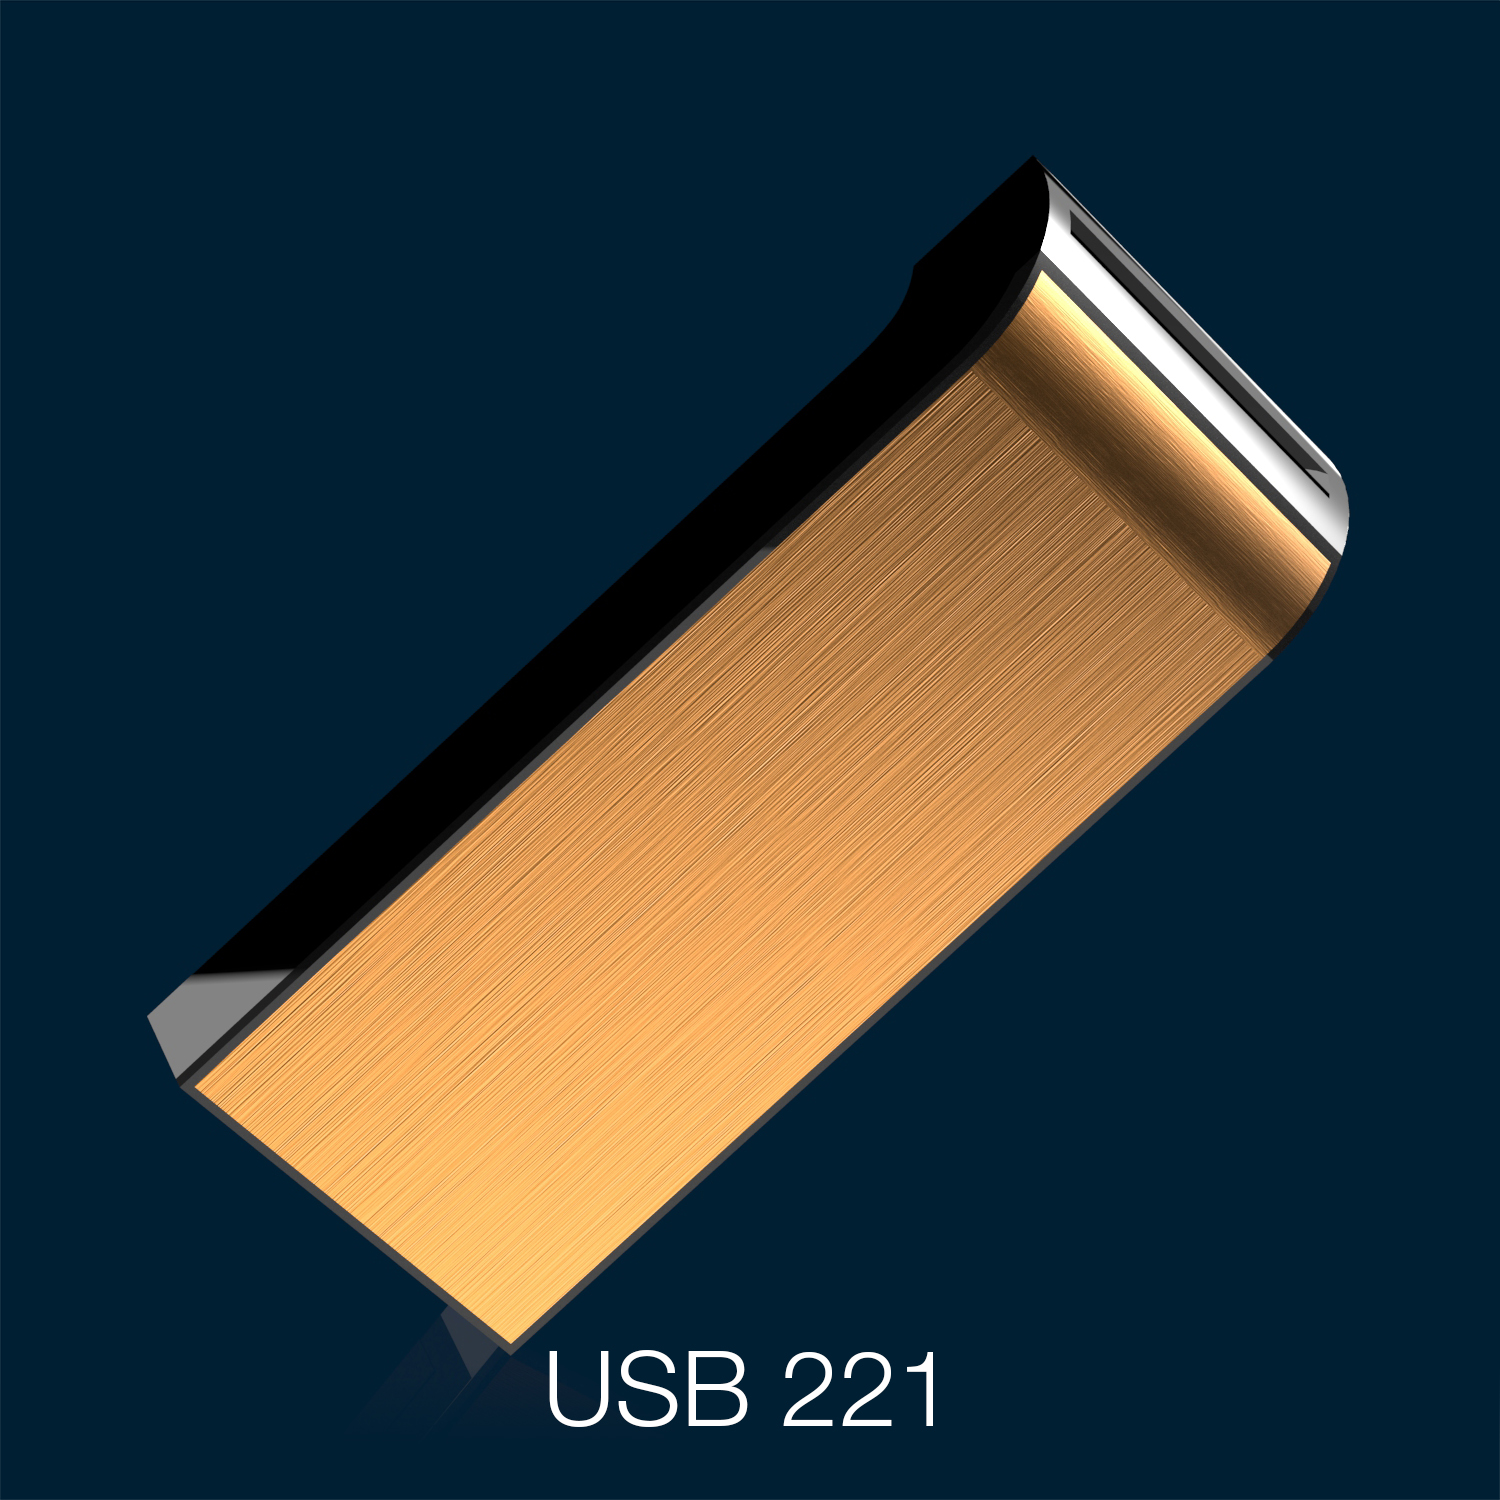 USB 221